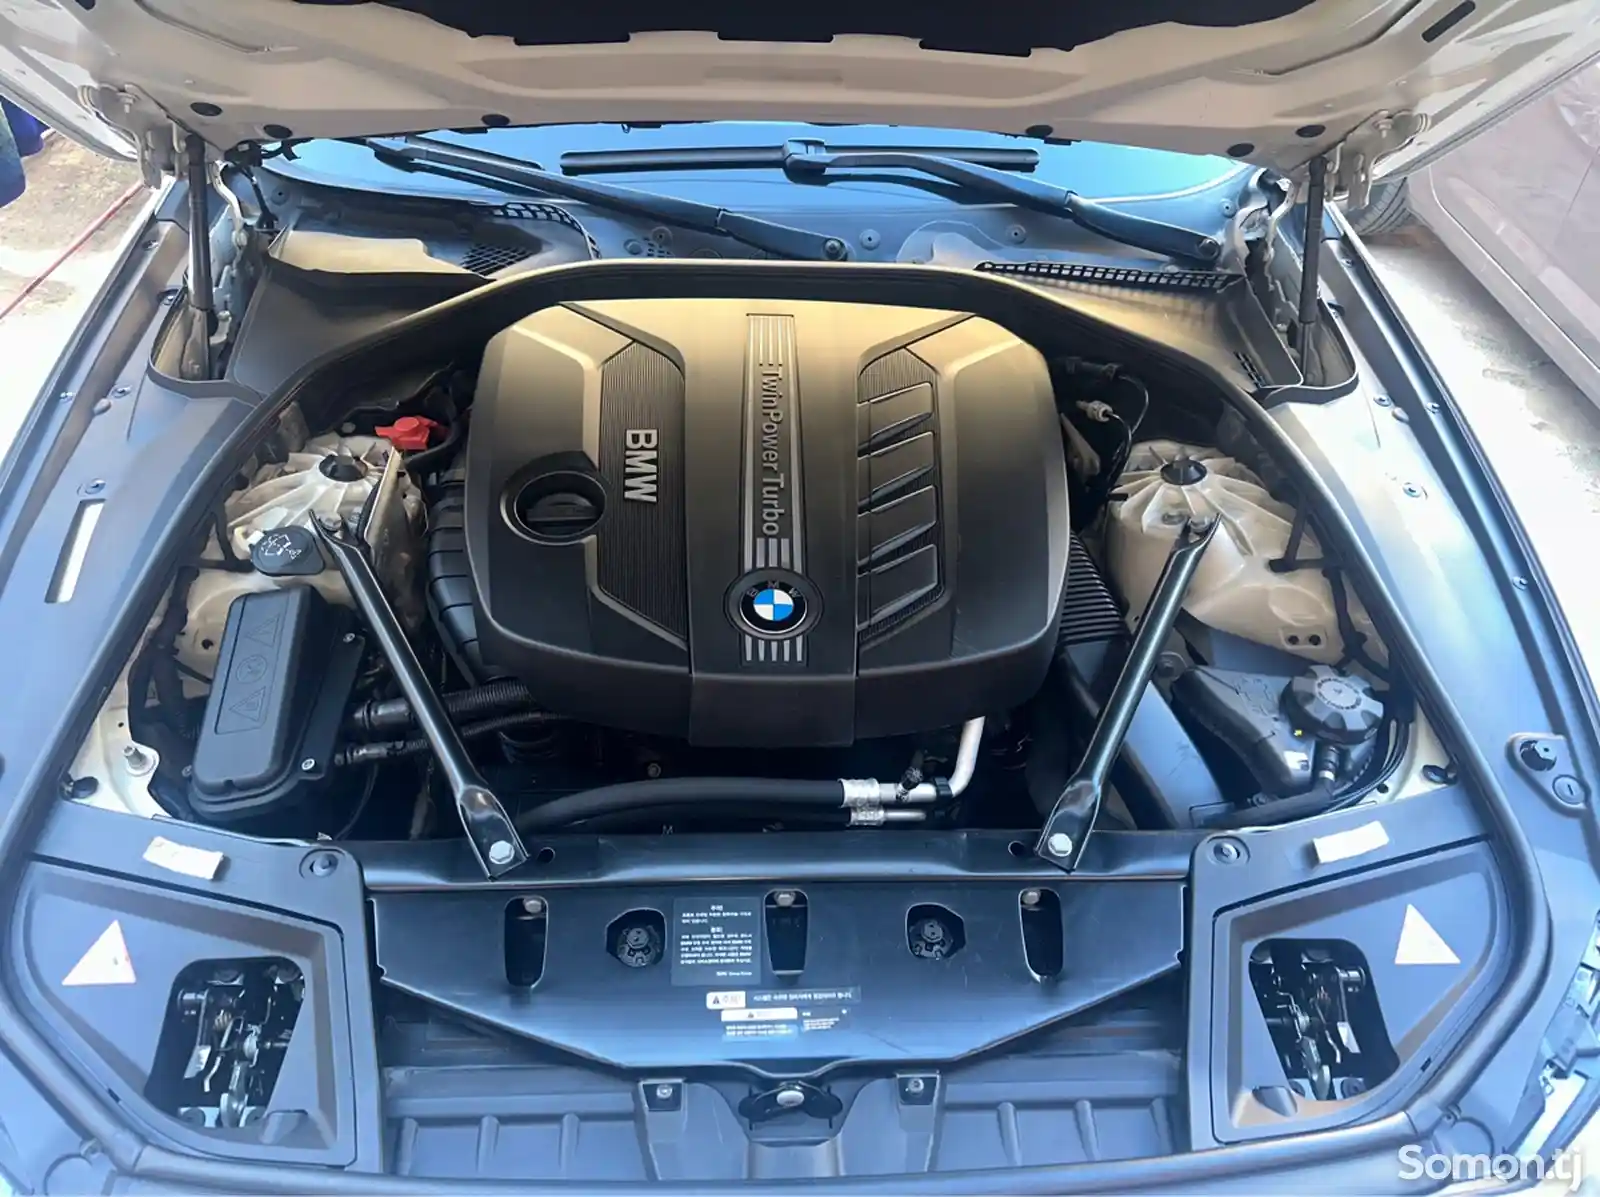 BMW 5 series, 2014-14